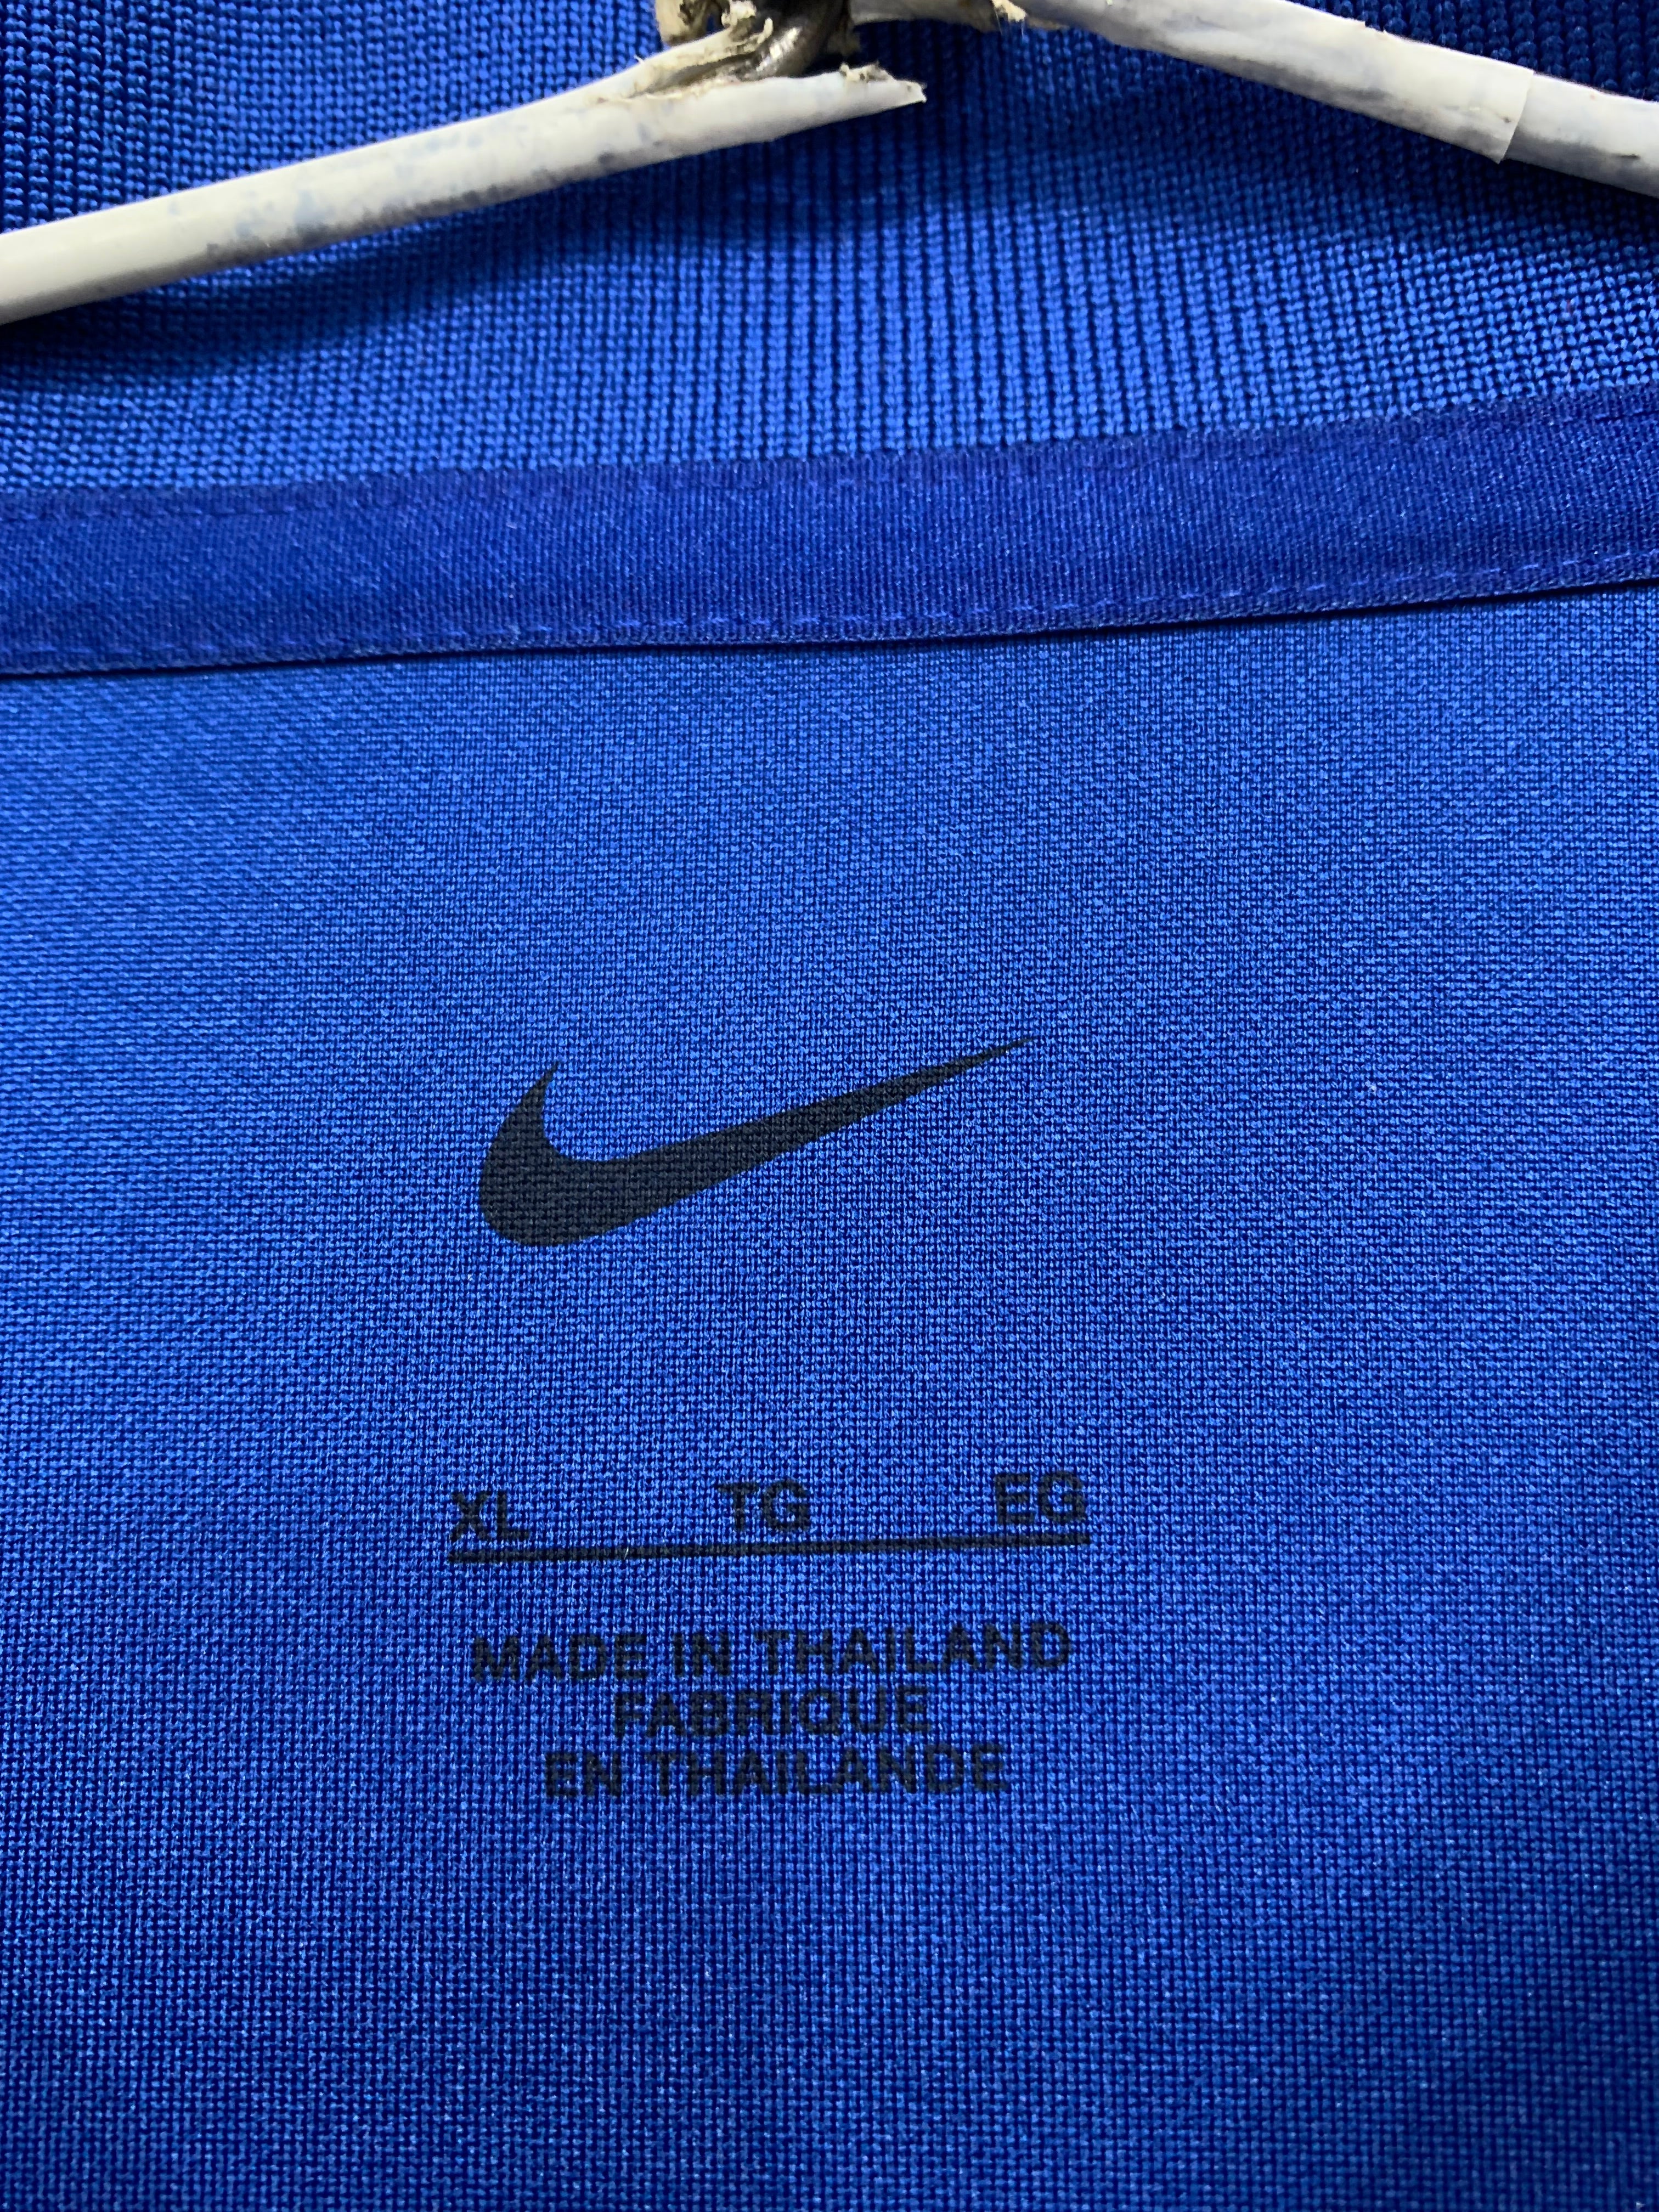 Nike Golf Branded Original For Sports  Polo Men T Shirt